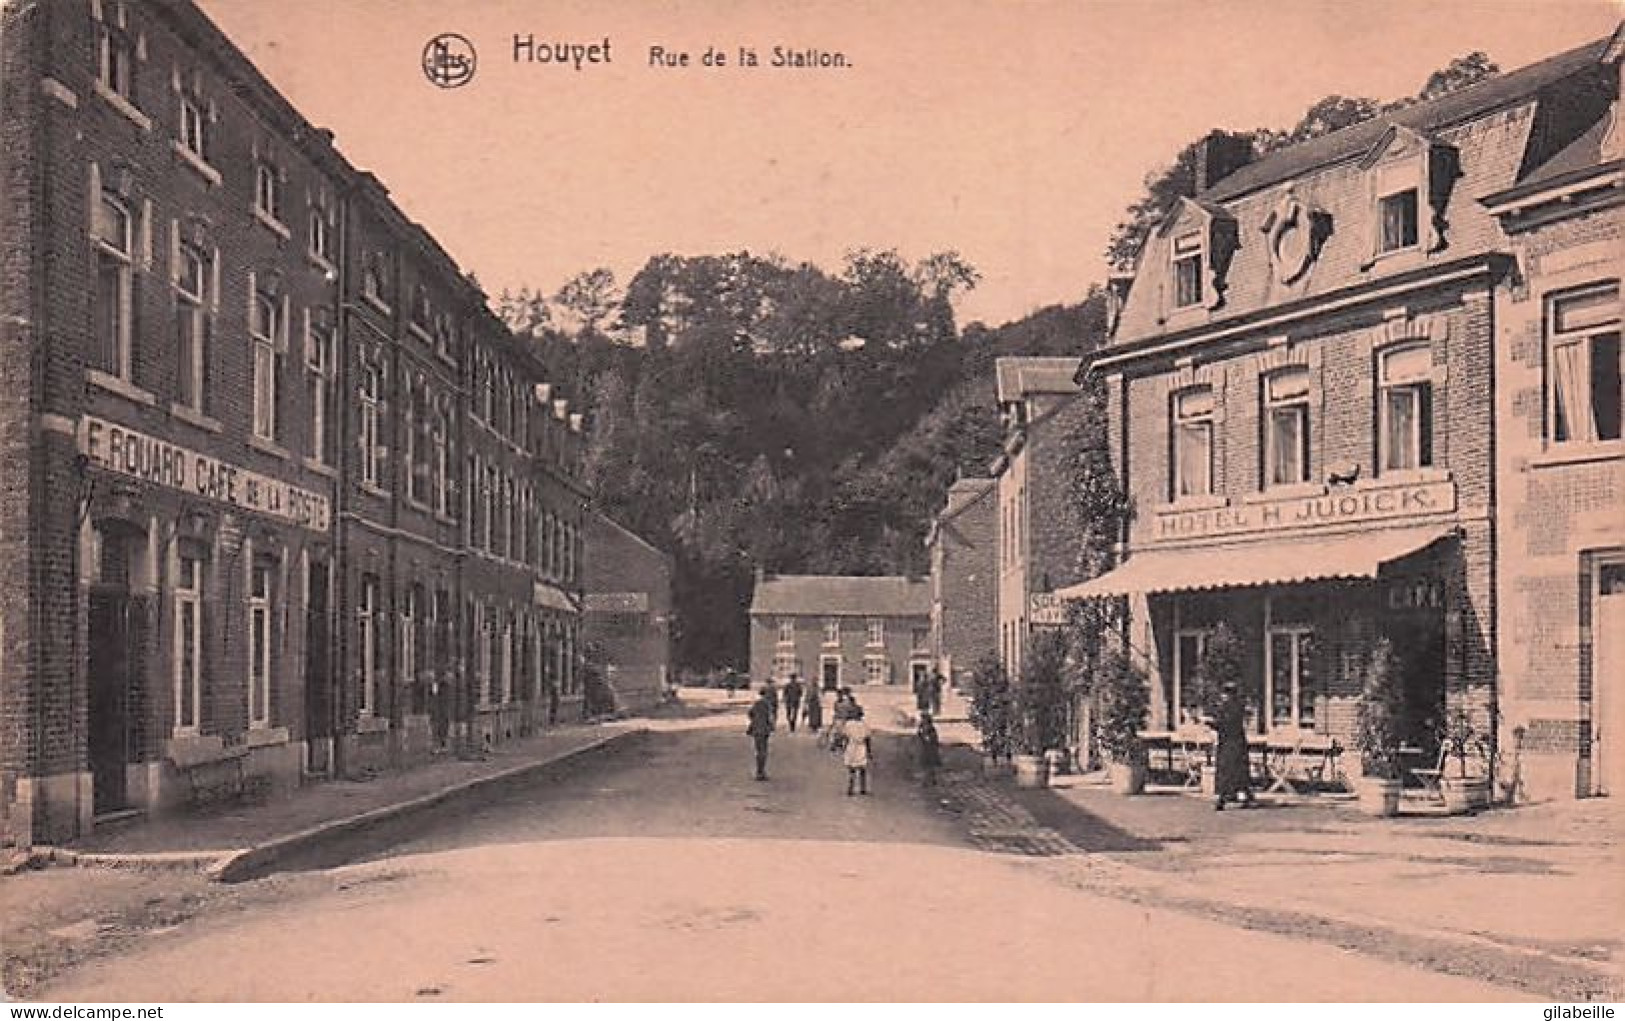 Namur - HOUYET -   Rue De La Station - Café De La Poste - Hotel H.Jidick - Houyet